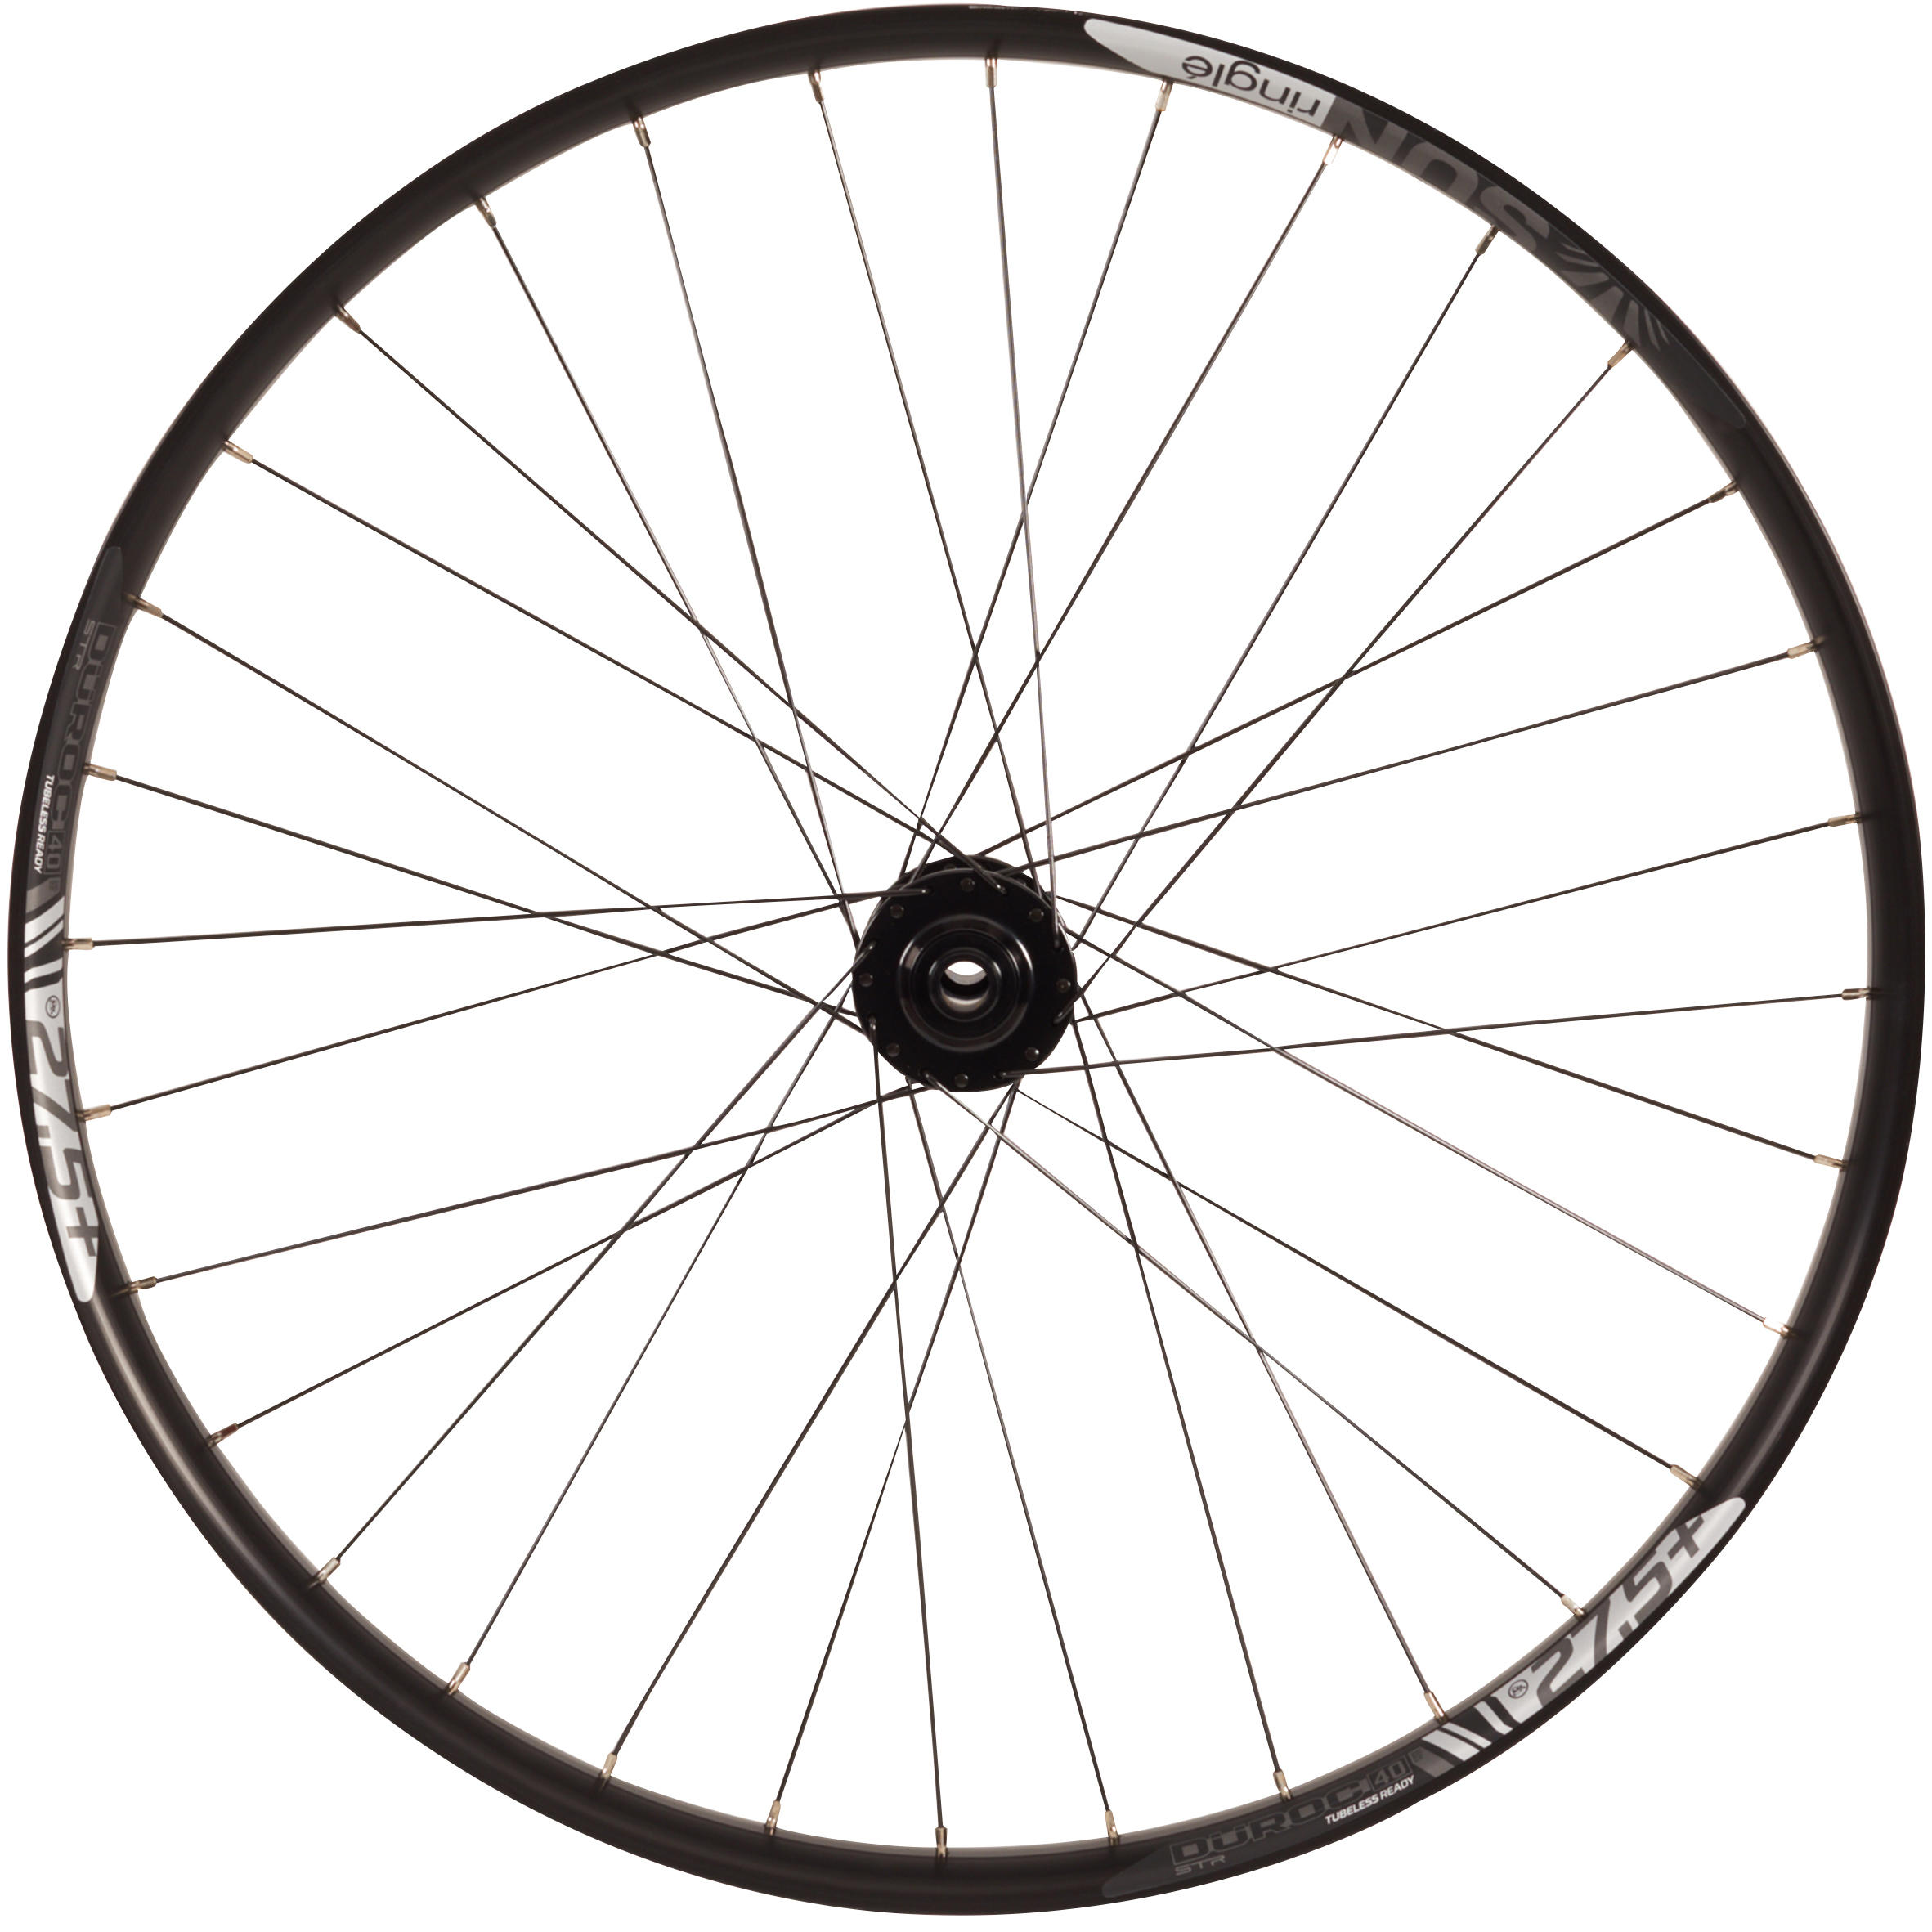 SUNRINGLE Mountain Bike Front Wheel 27.5+ Double Wall Disc Boost 15x110 Duroc 40 TR